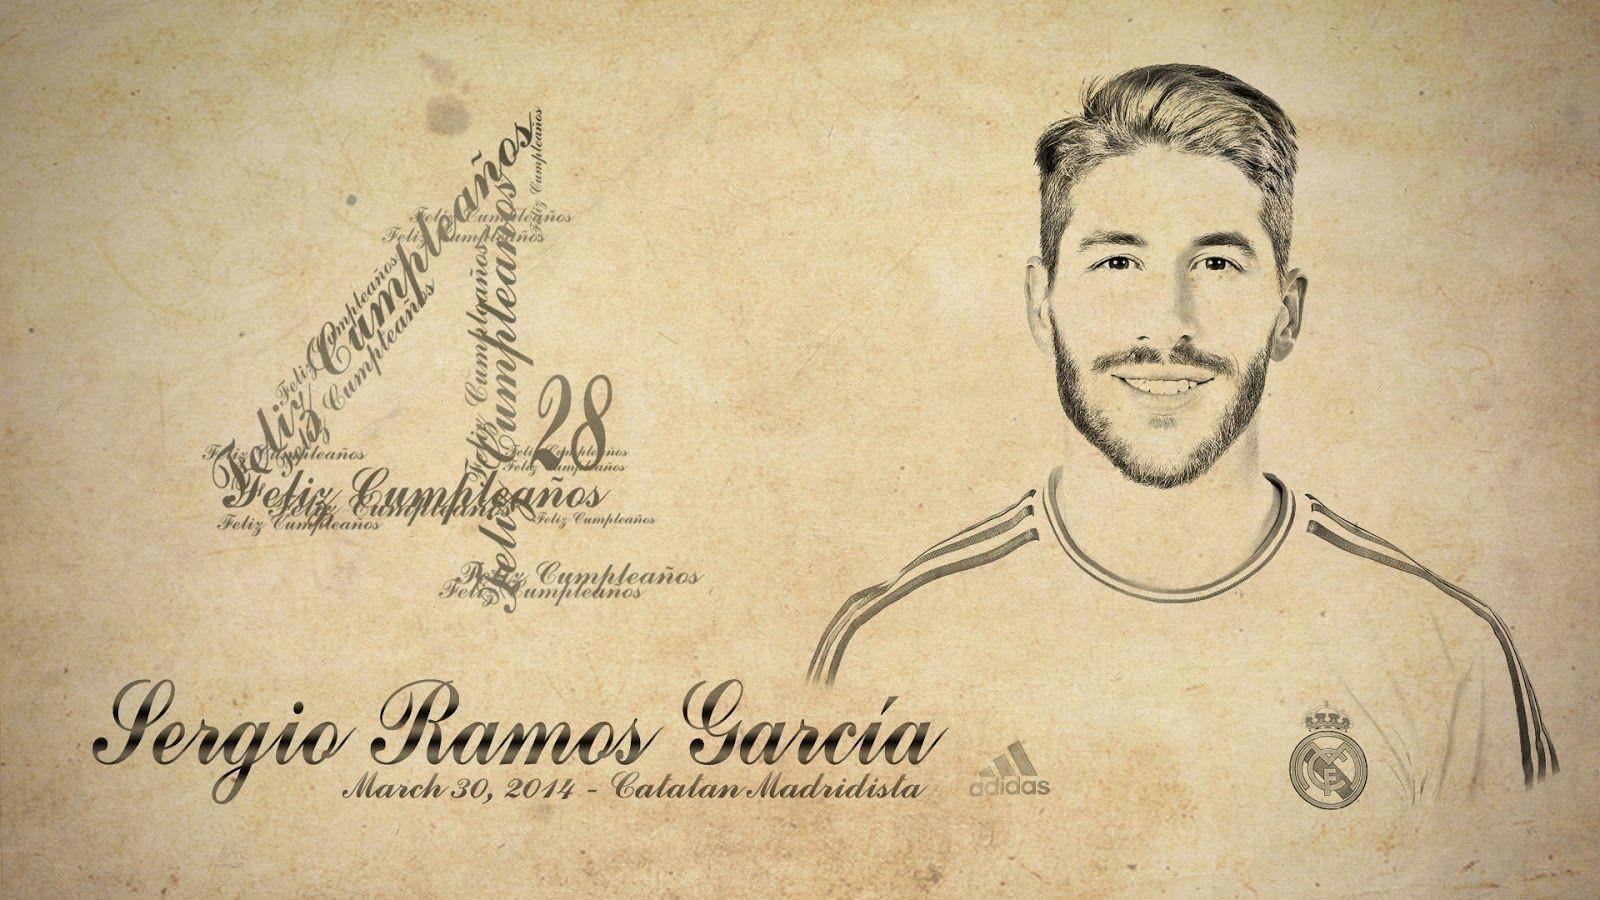 Sergio Ramos 2015 Wallpaper HD